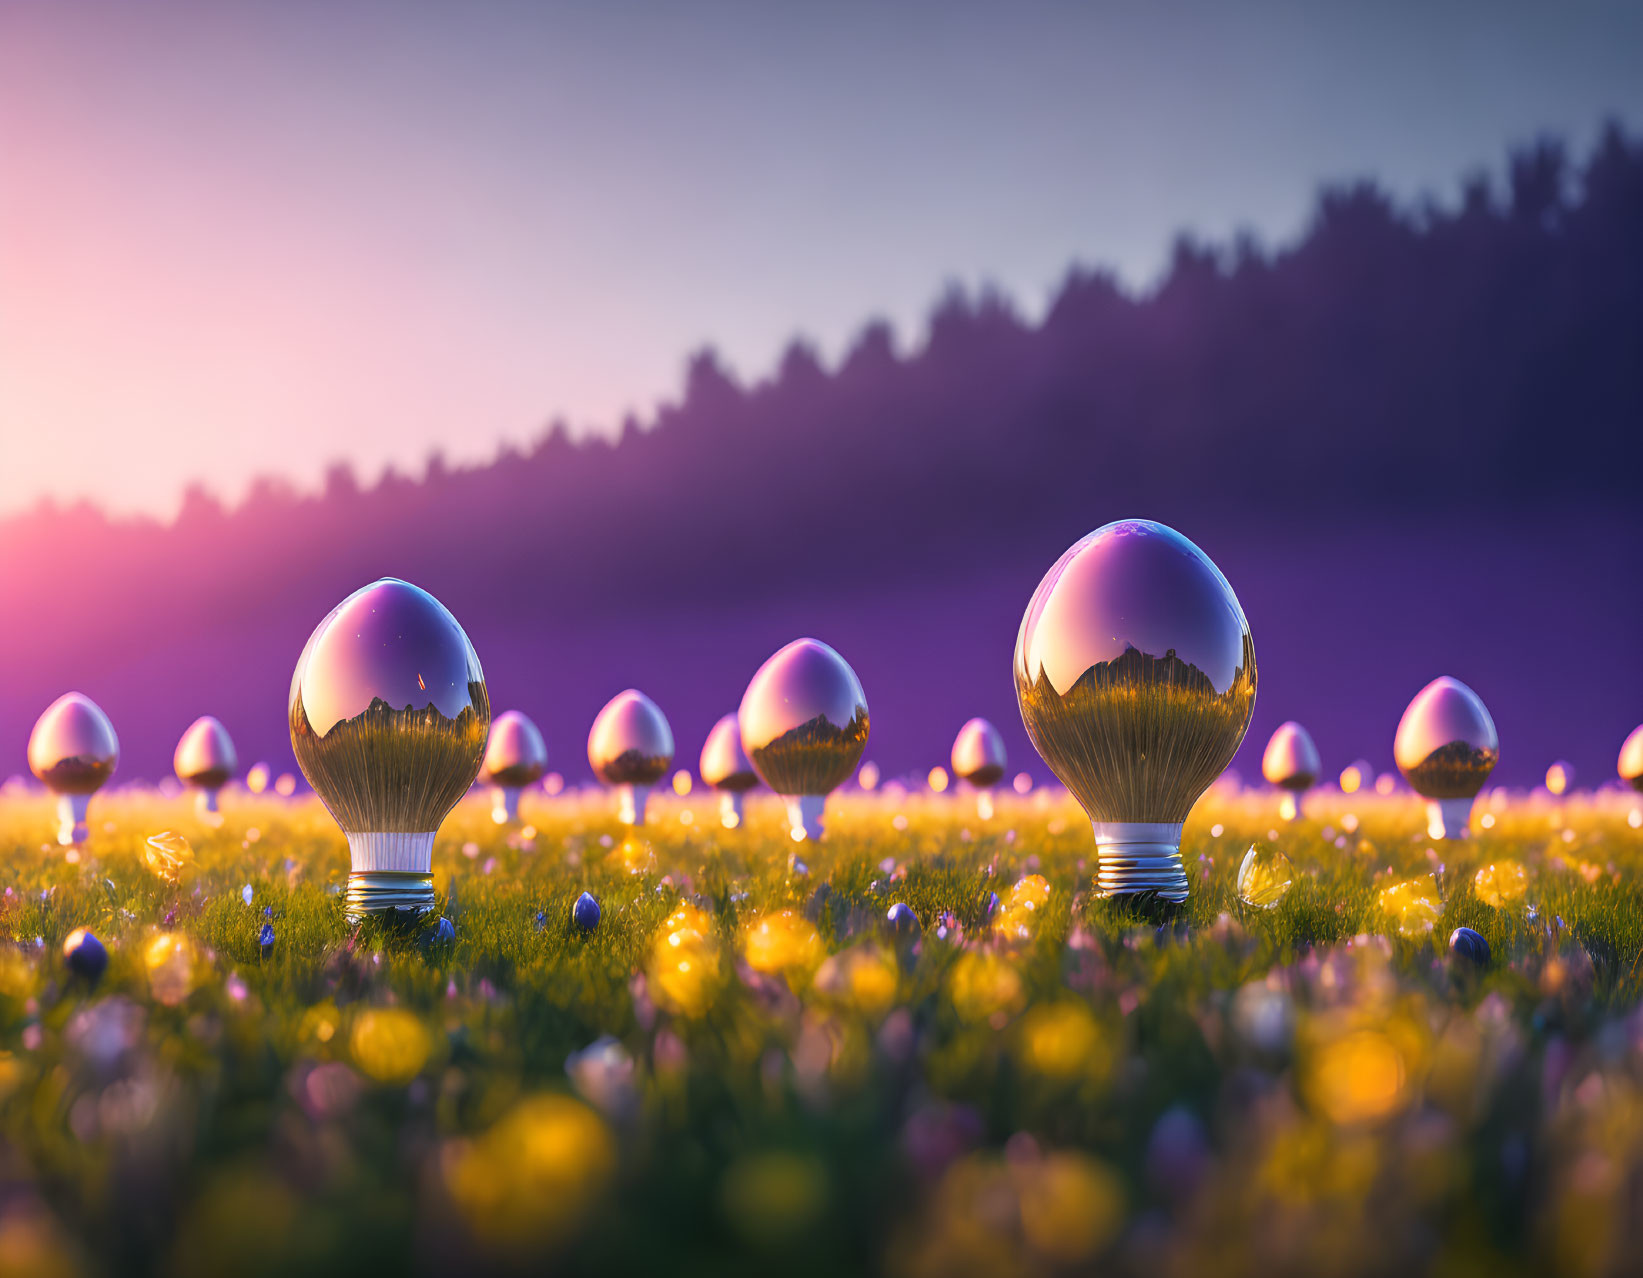 Ethereal sunrise reflection on light bulbs in flower field